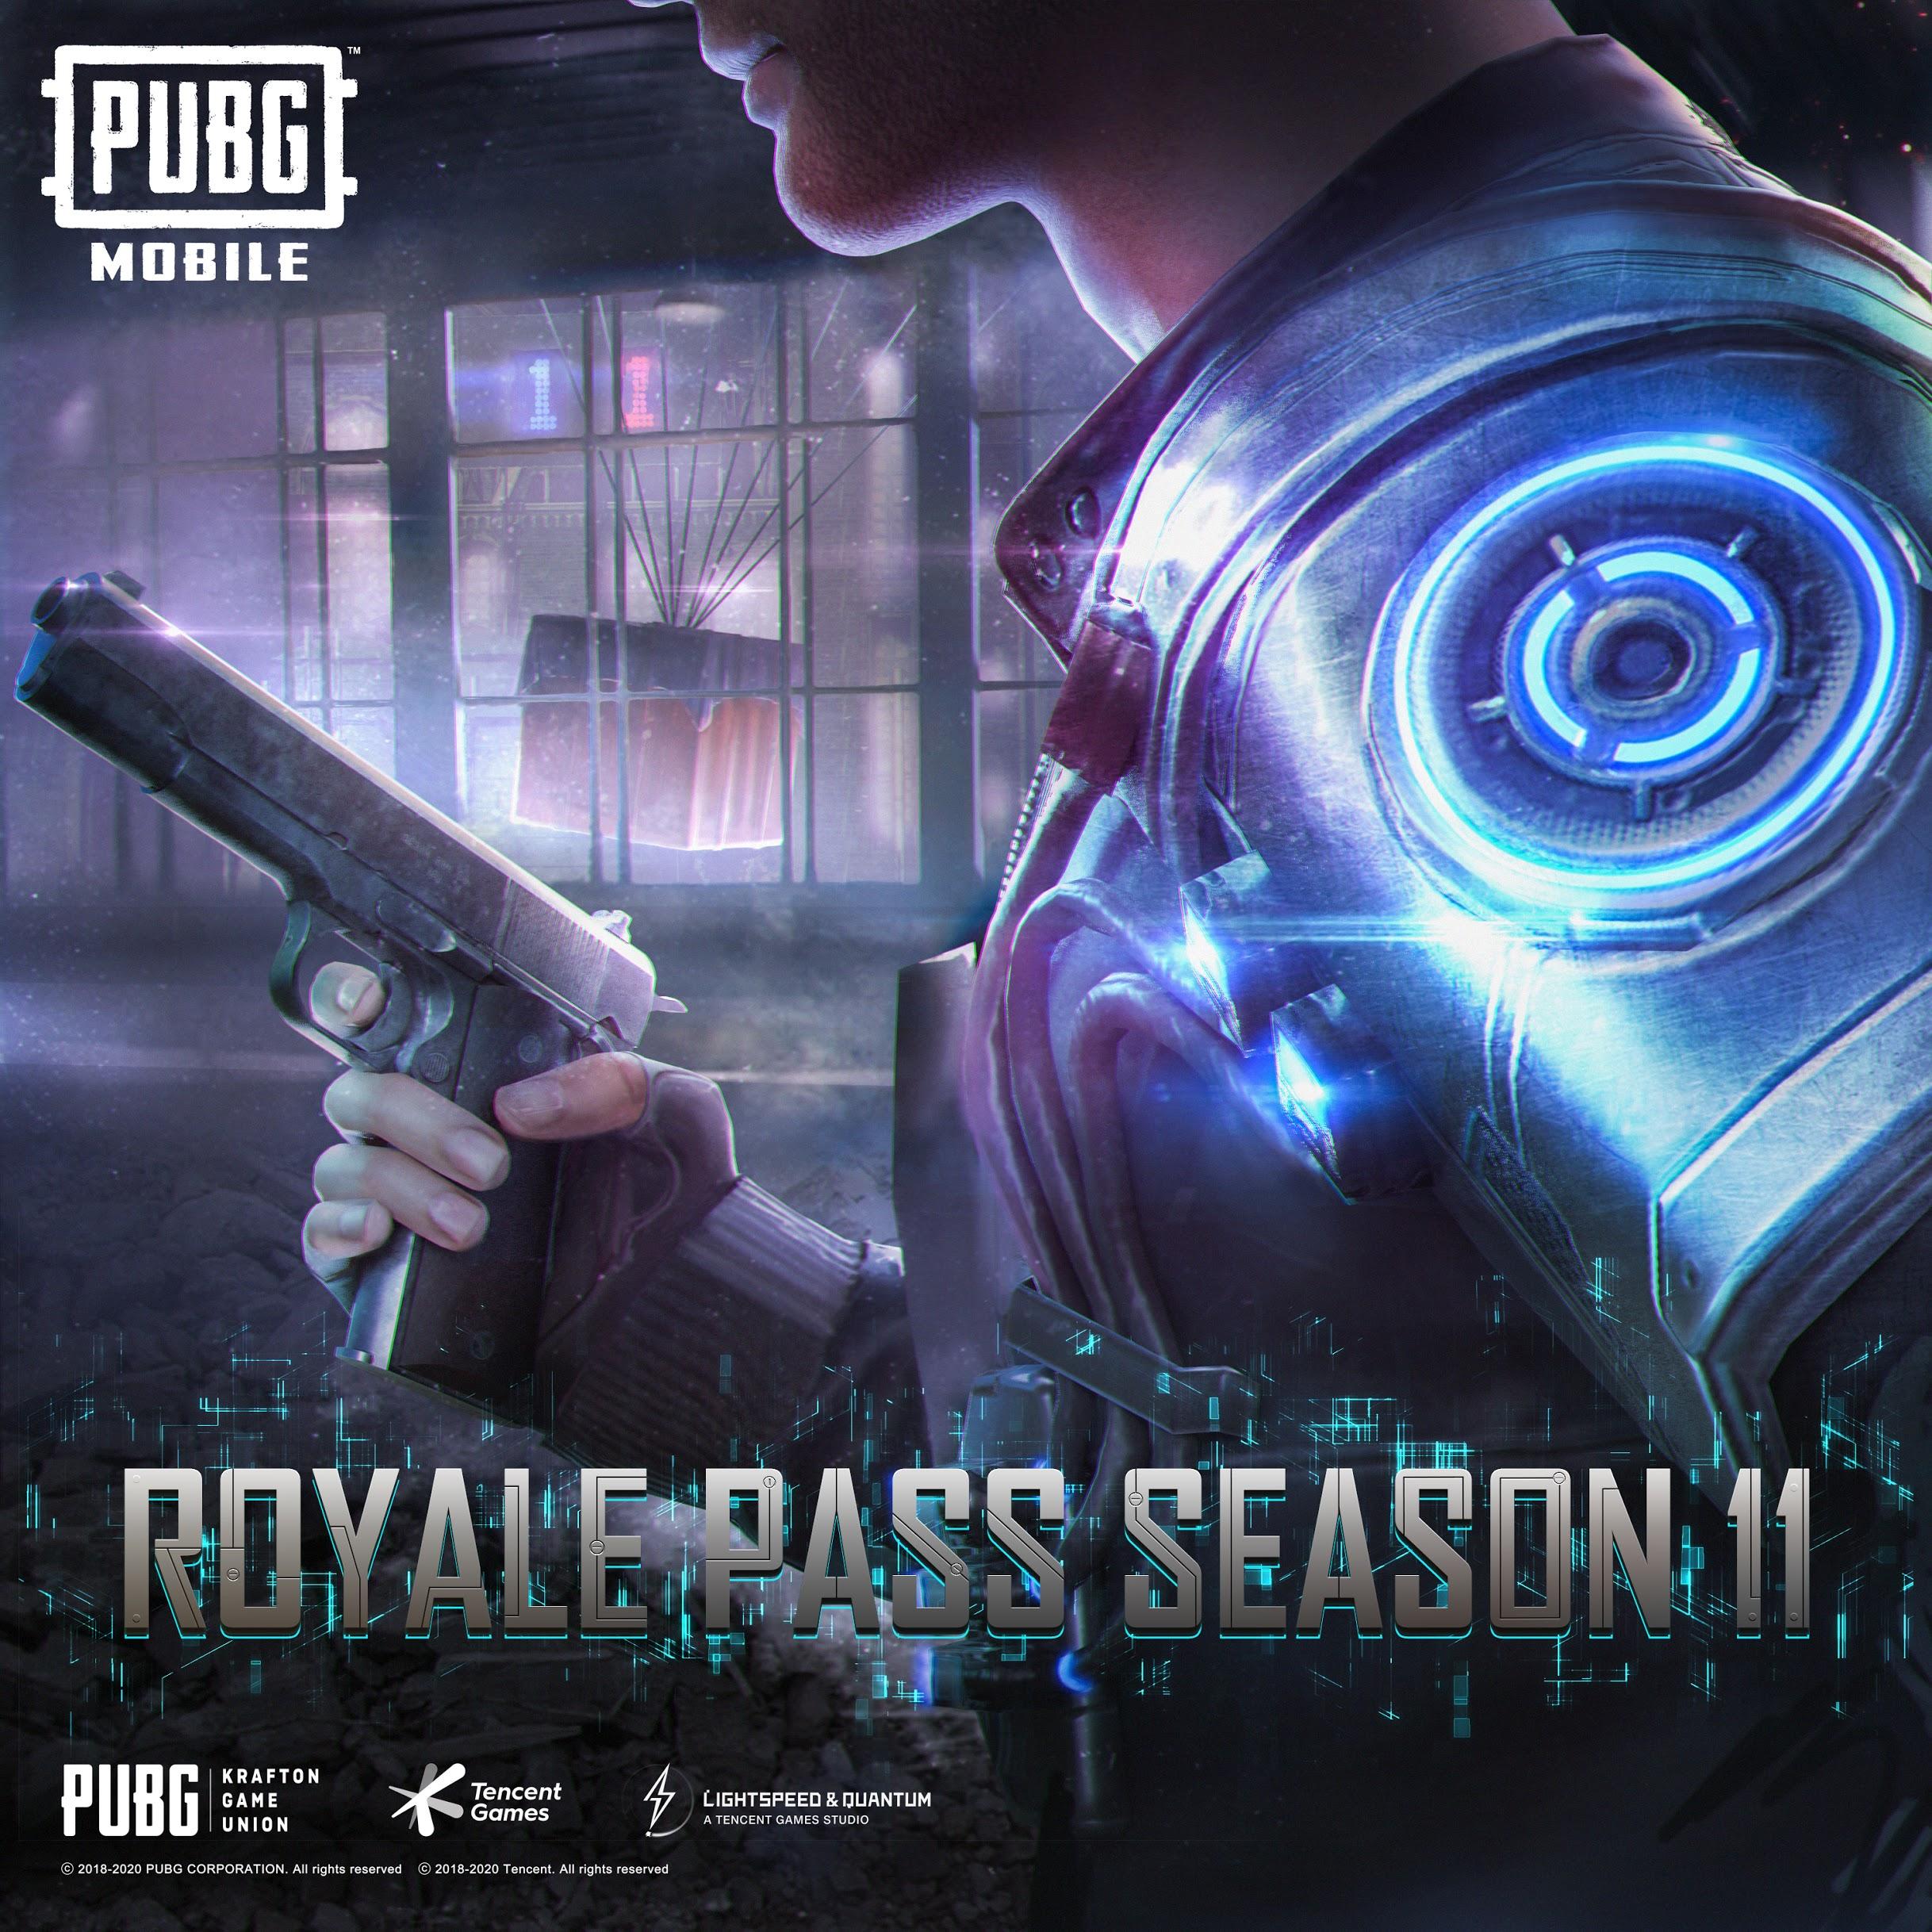 PUBG Mobile Season 11 Full HD wallpaper